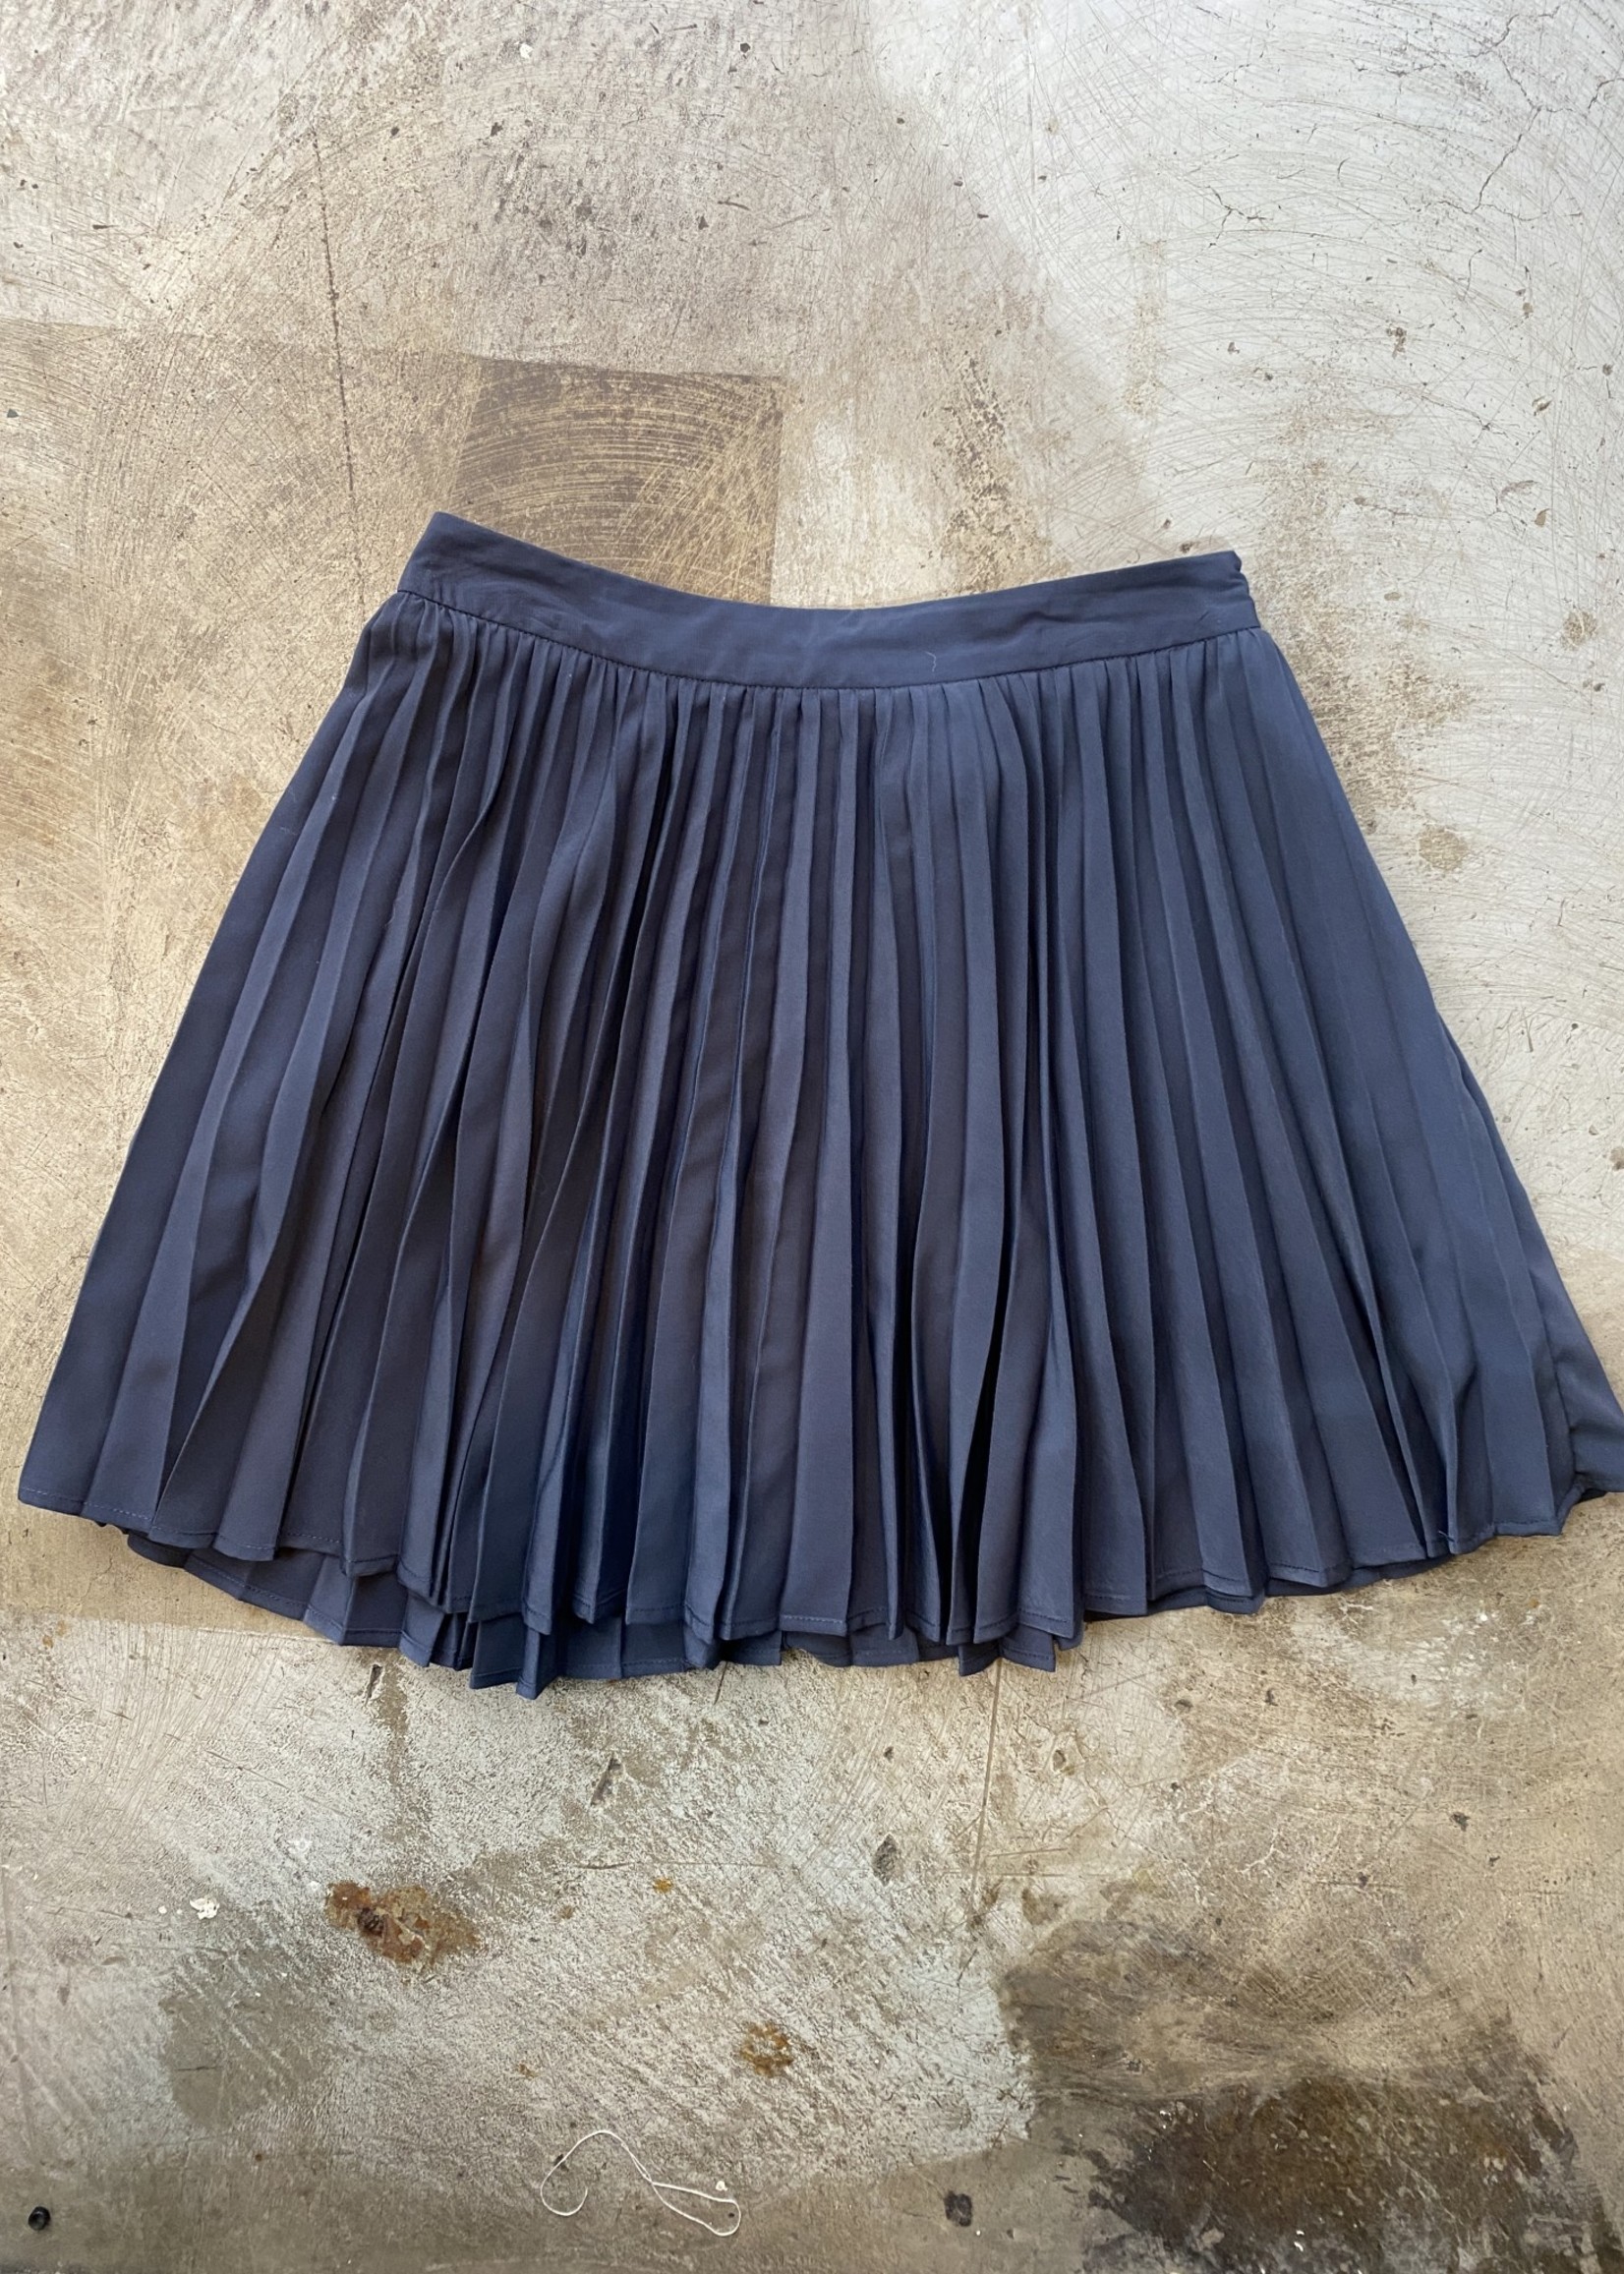 Zara Navy Pleated Skirt M/27”